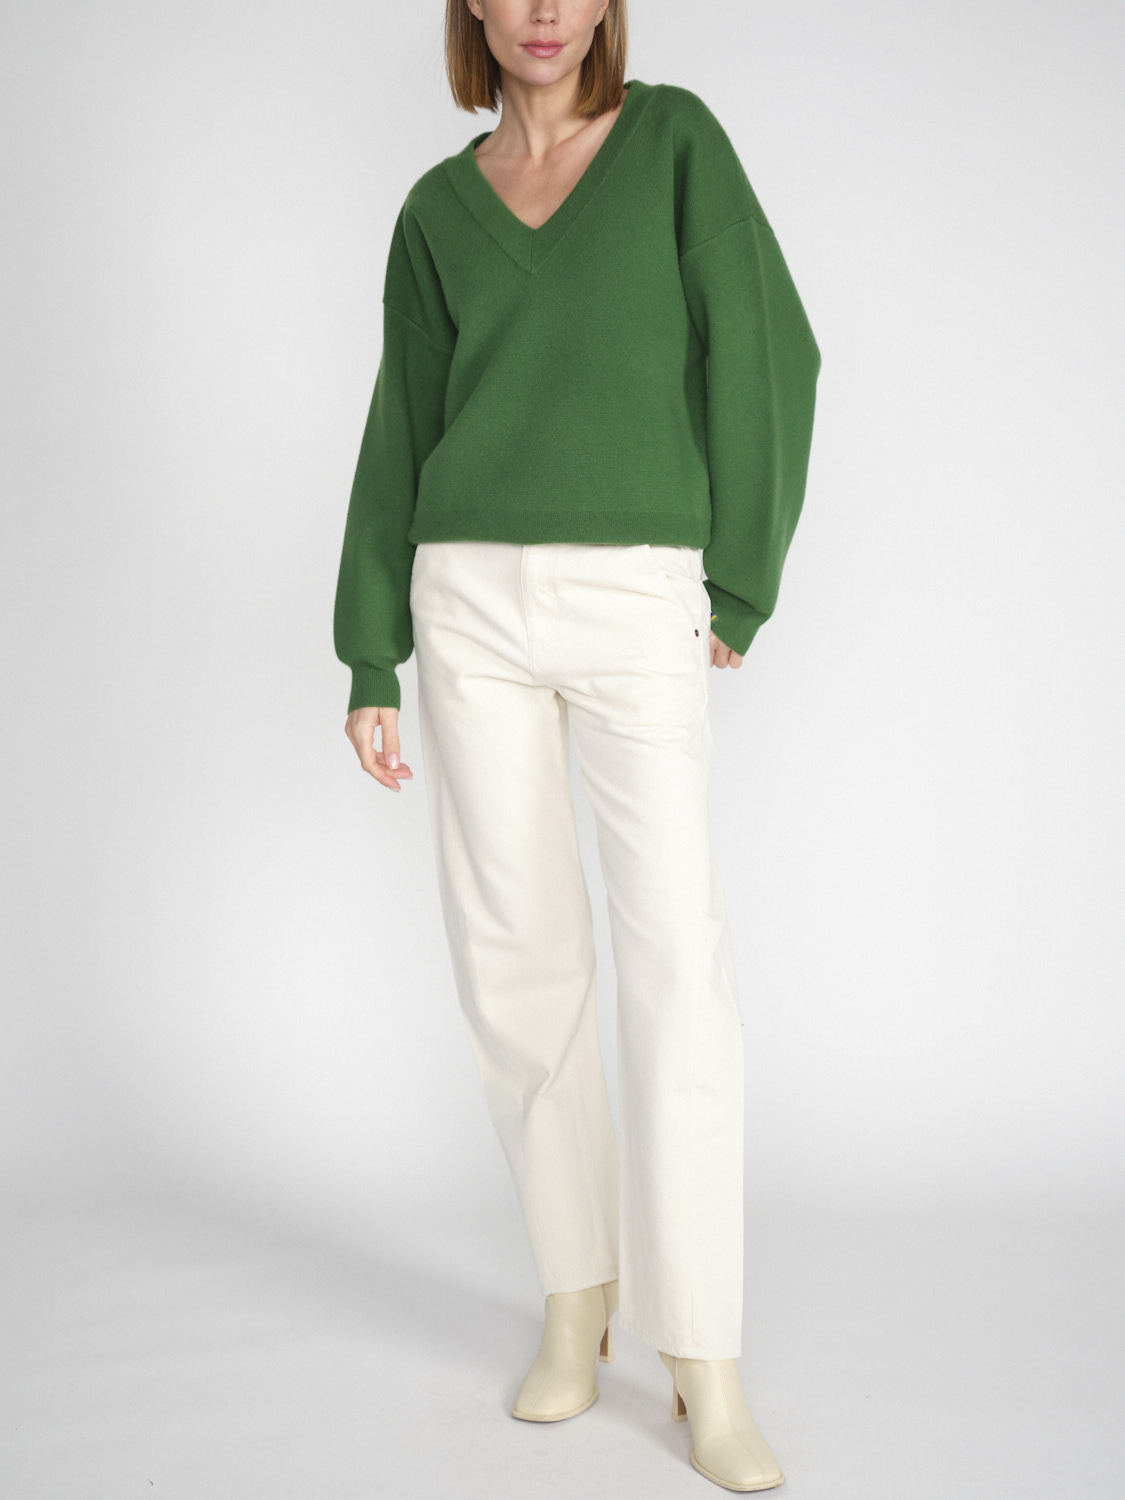 Extreme Cashmere N° 316 Lana - Jersey de cachemira con cuello de pico y doble faz  verde Talla única